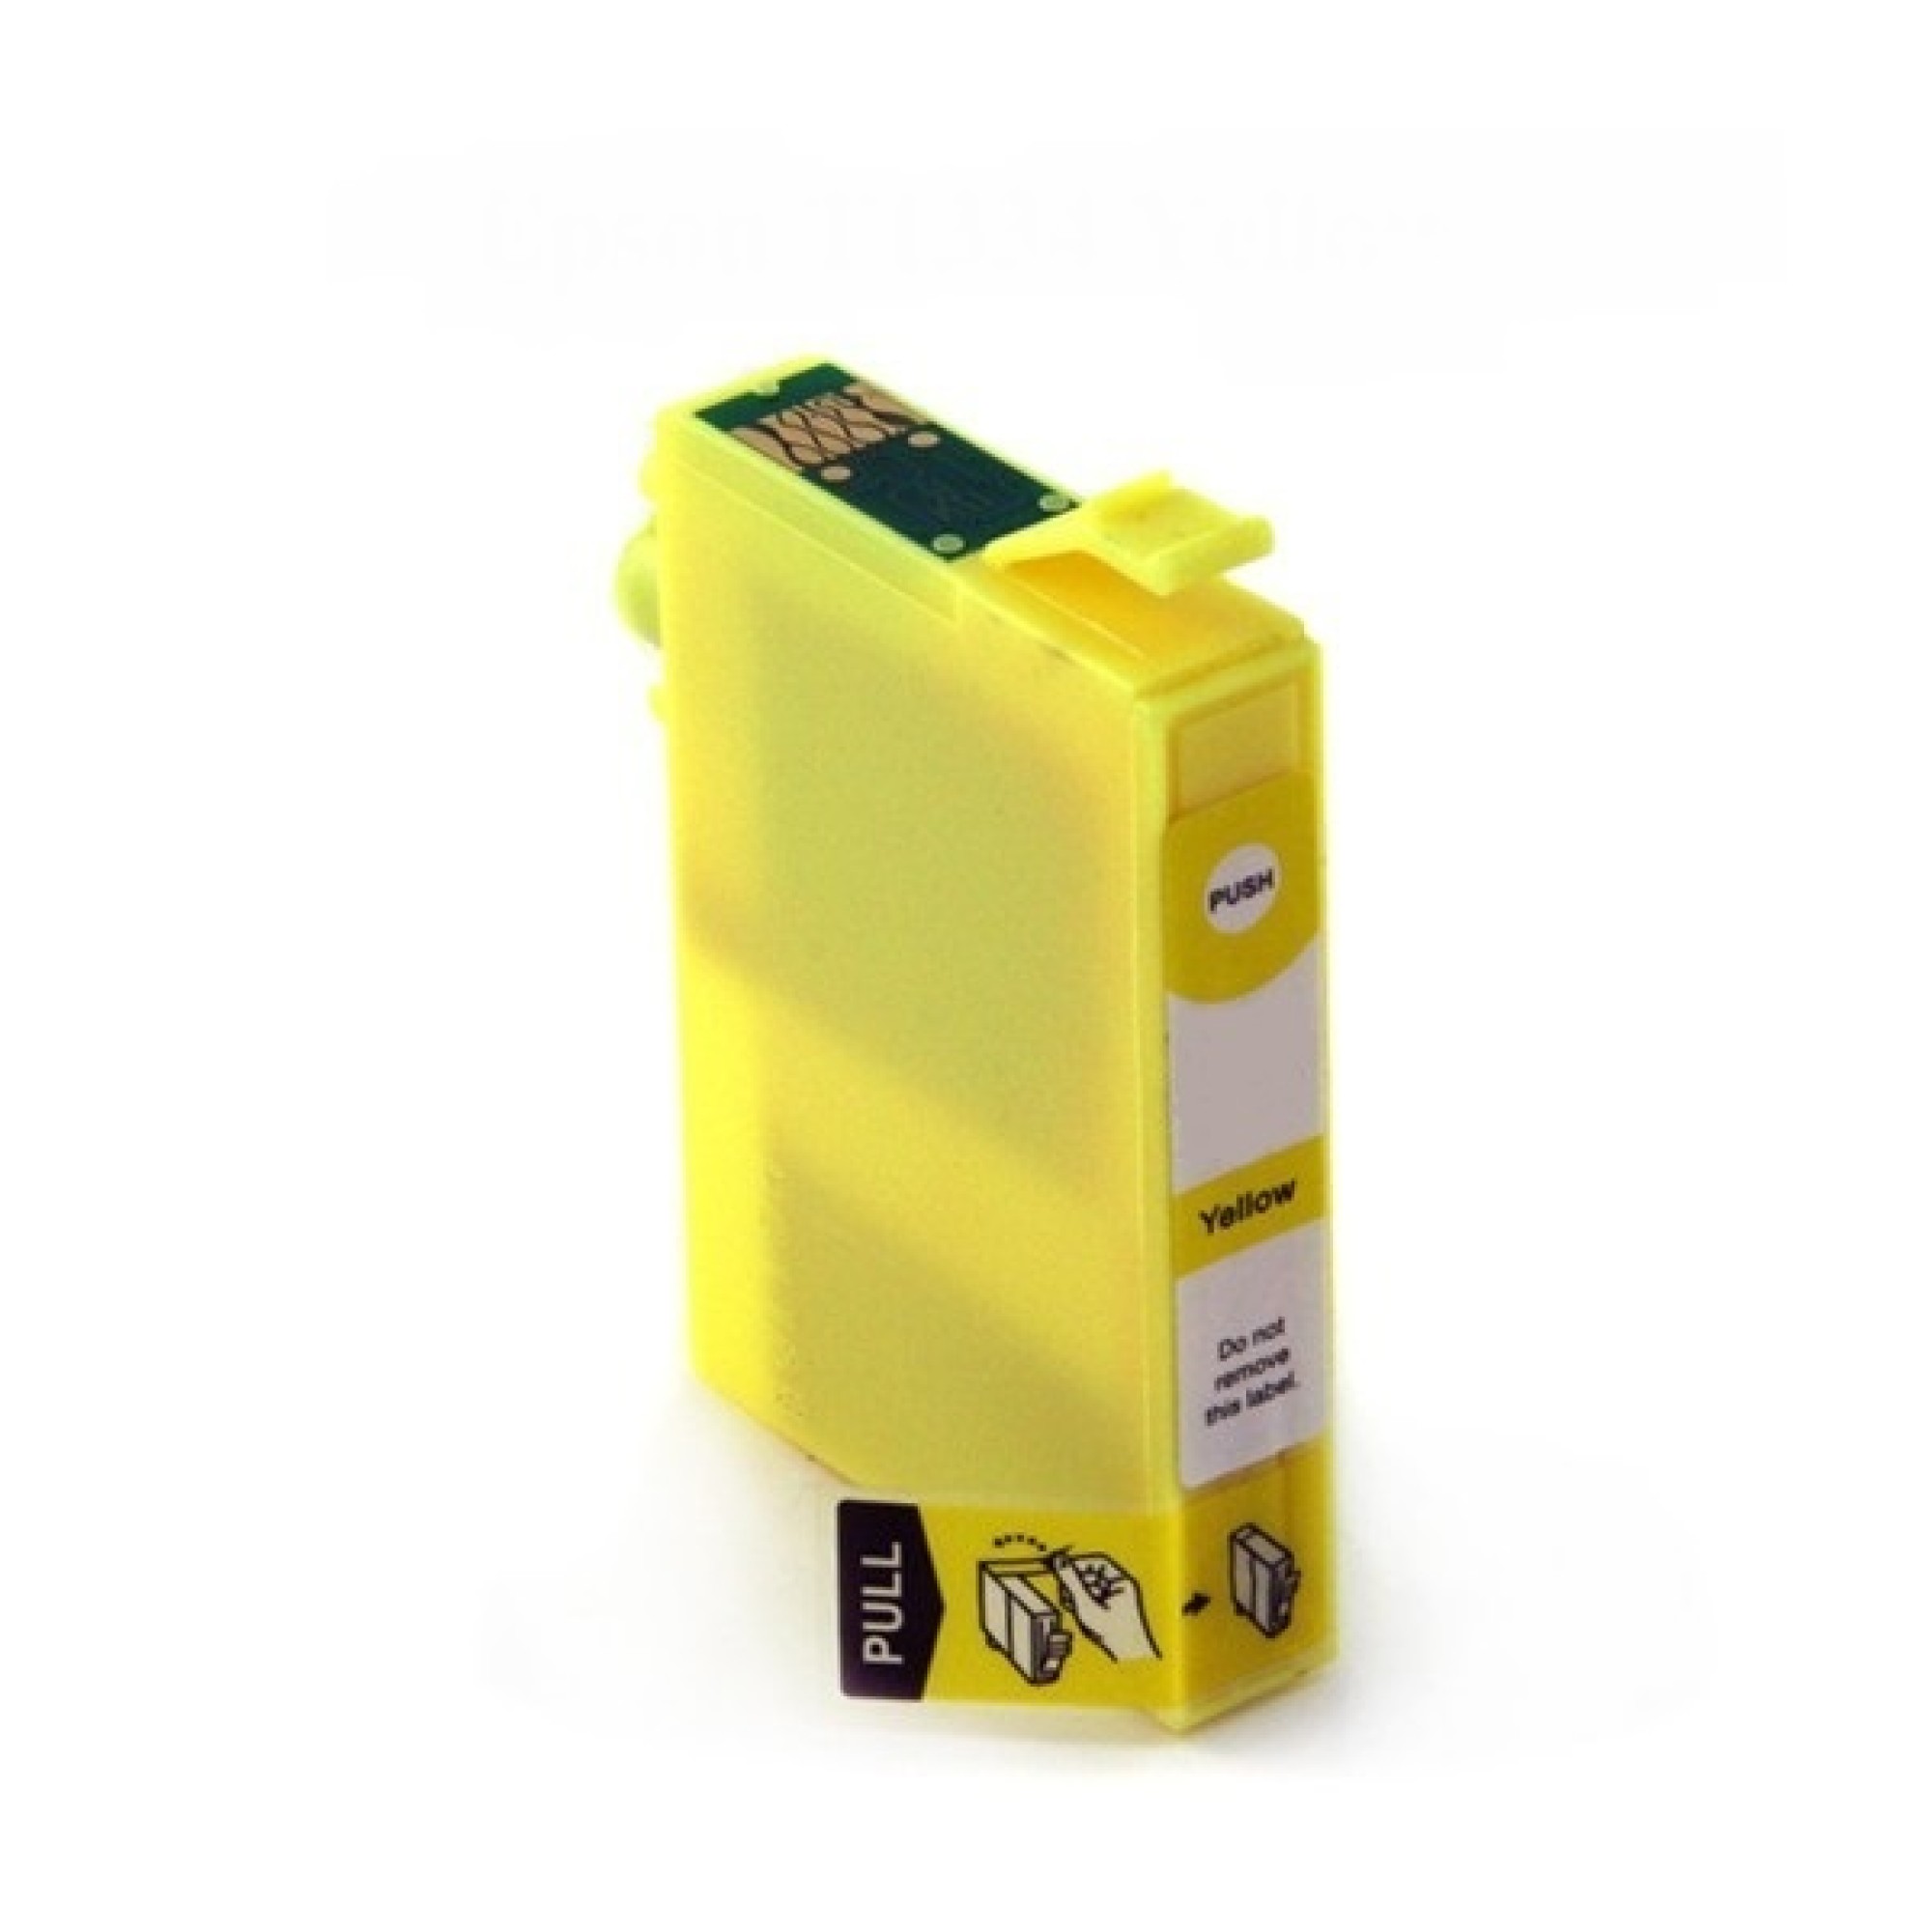 Epson 73N Ink Cartridge Compatible Yellow